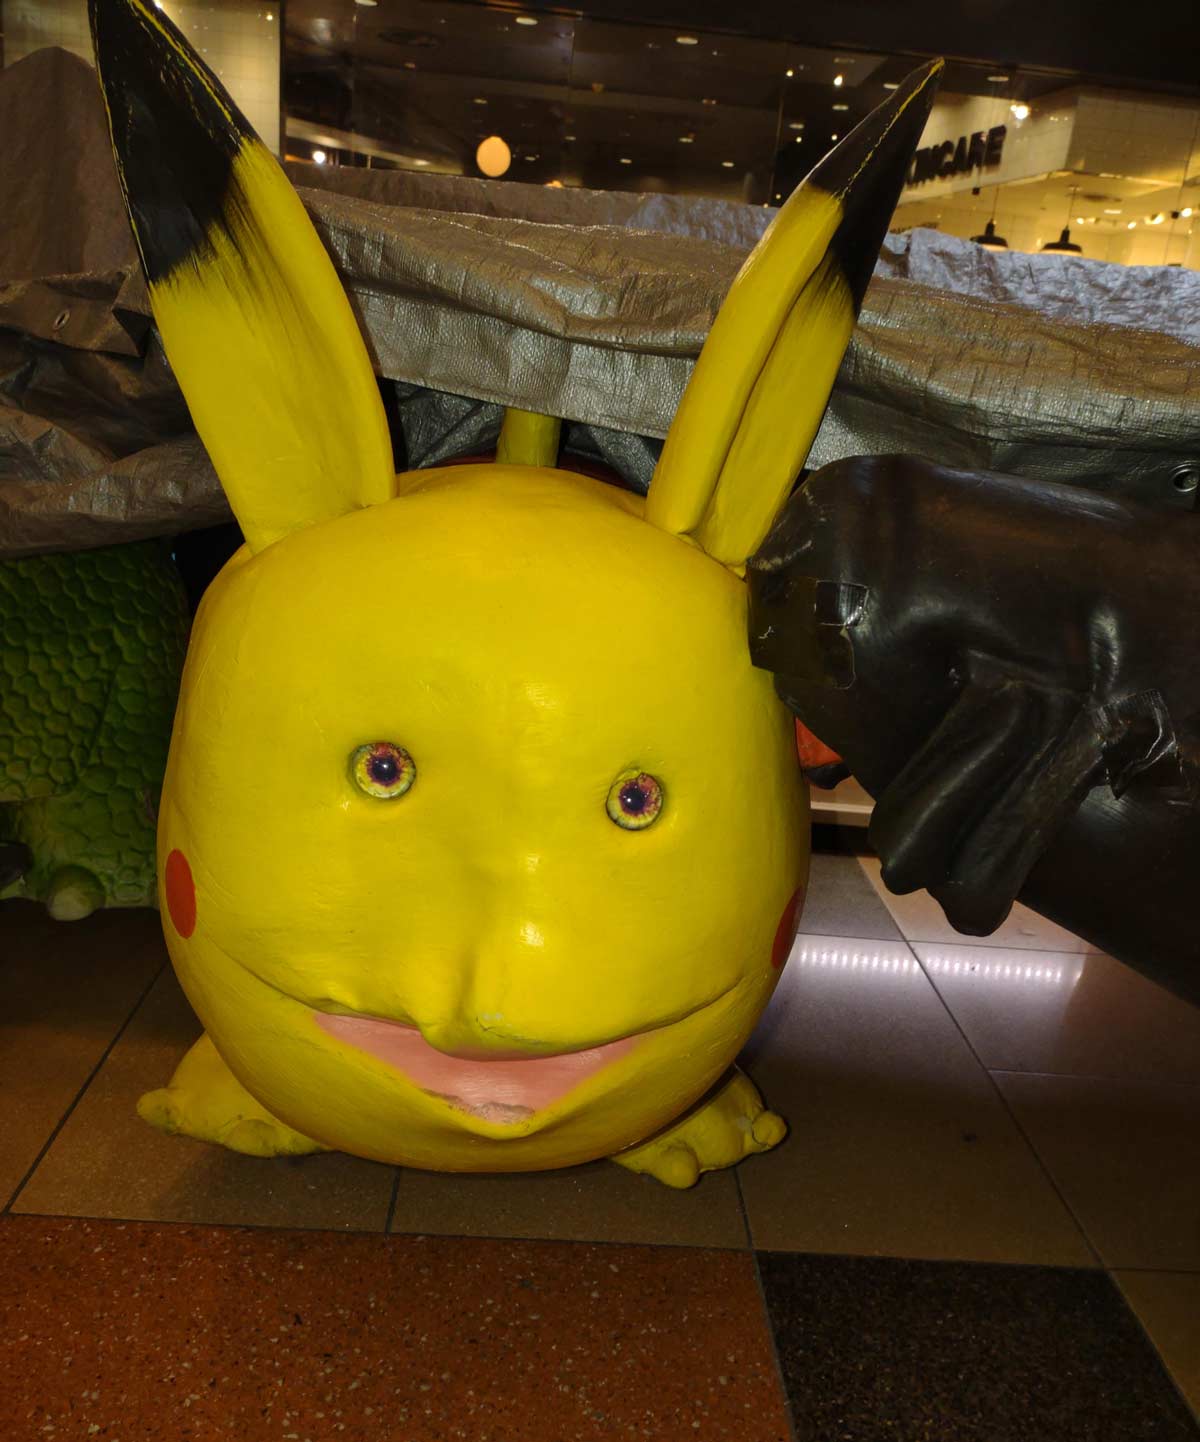 Cool Stuff Bootleg Pikachu ride at my local mall